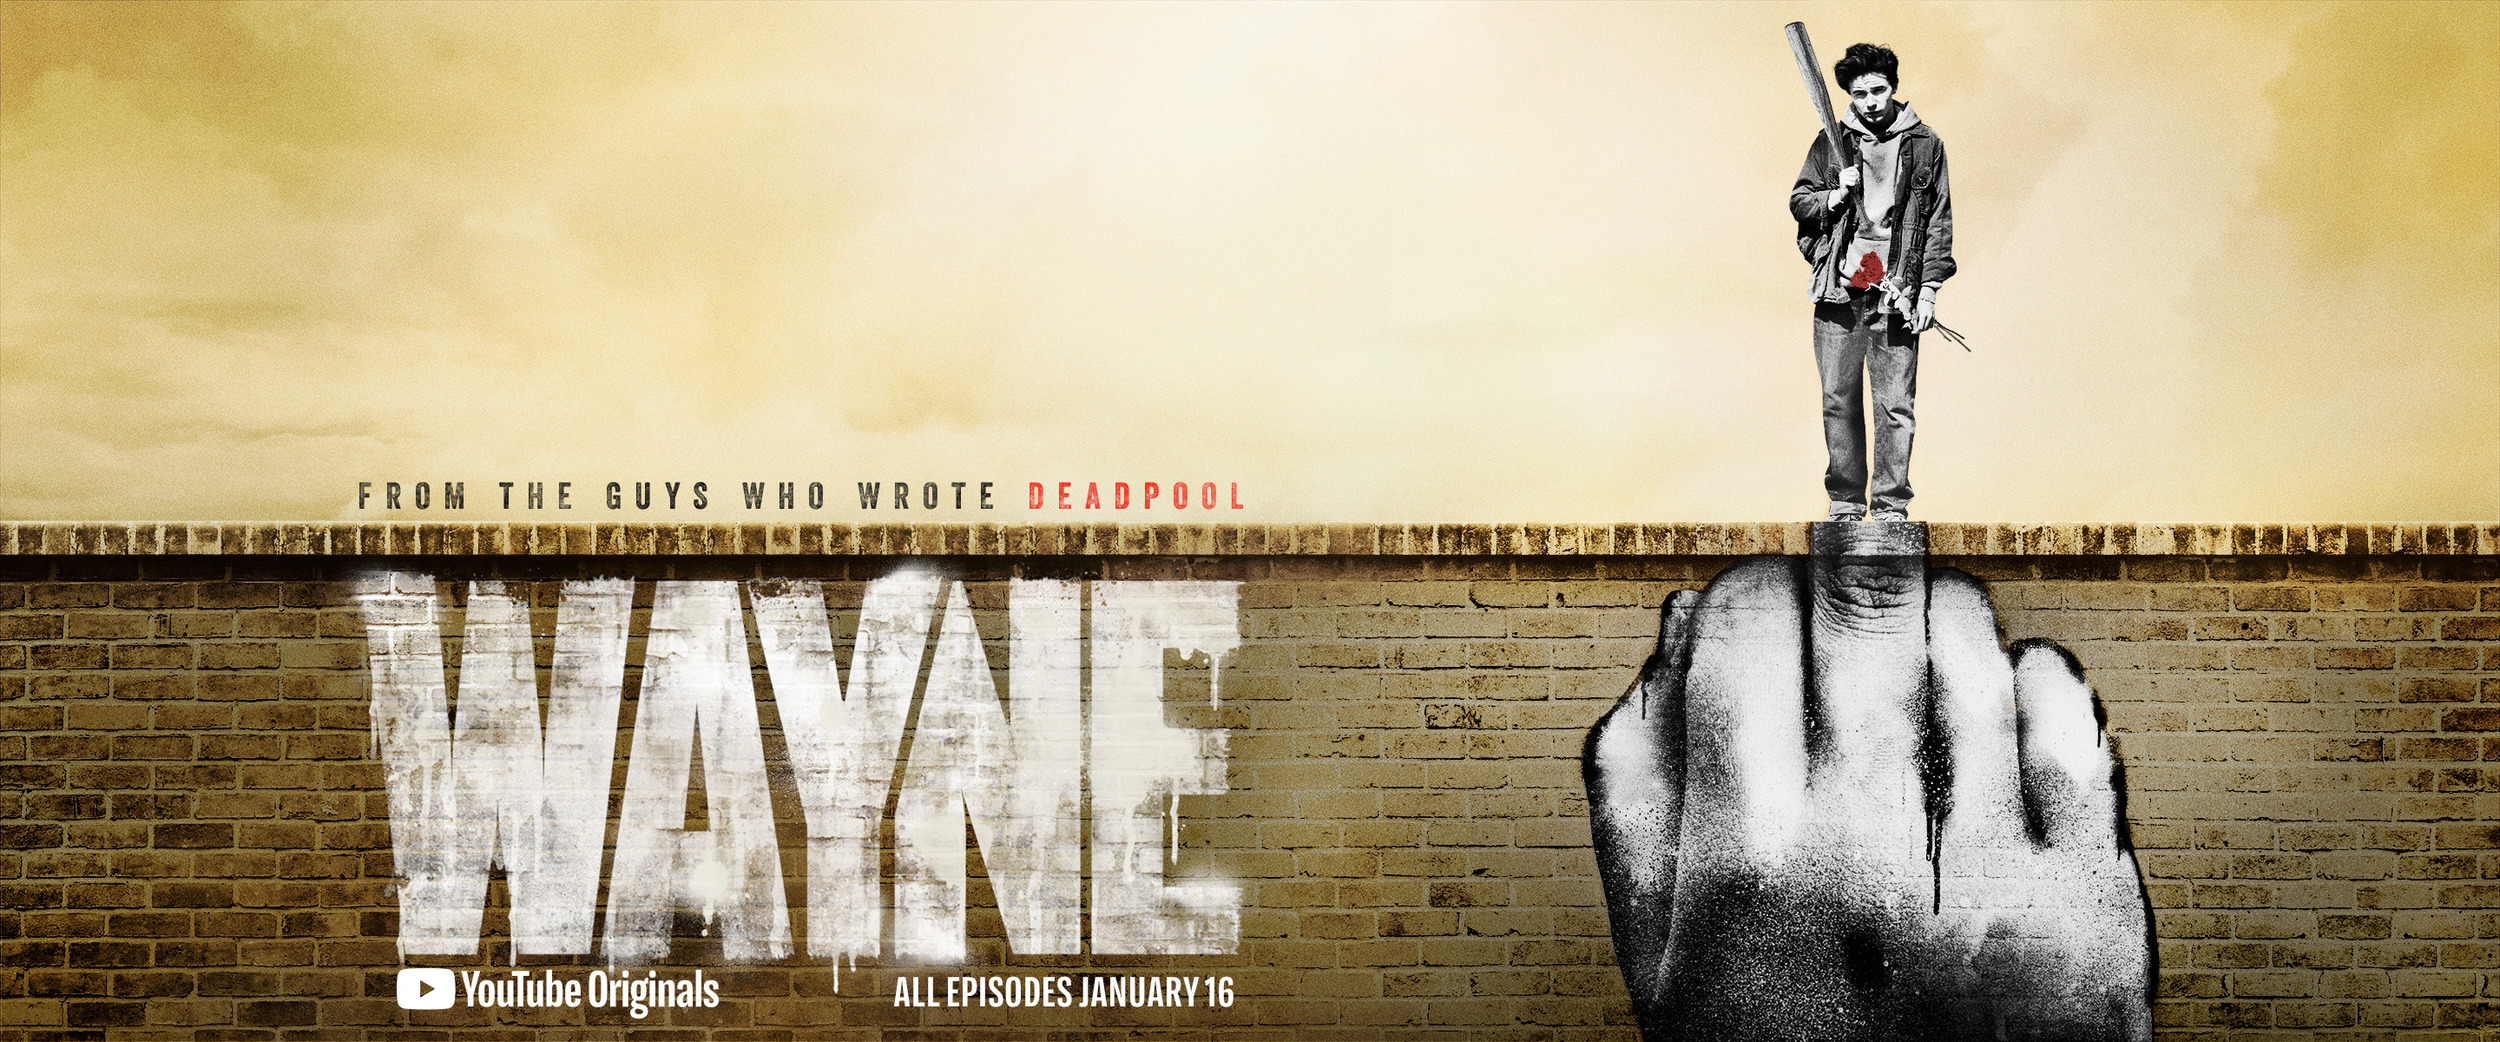 Mega Sized TV Poster Image for Wayne (#2 of 12)